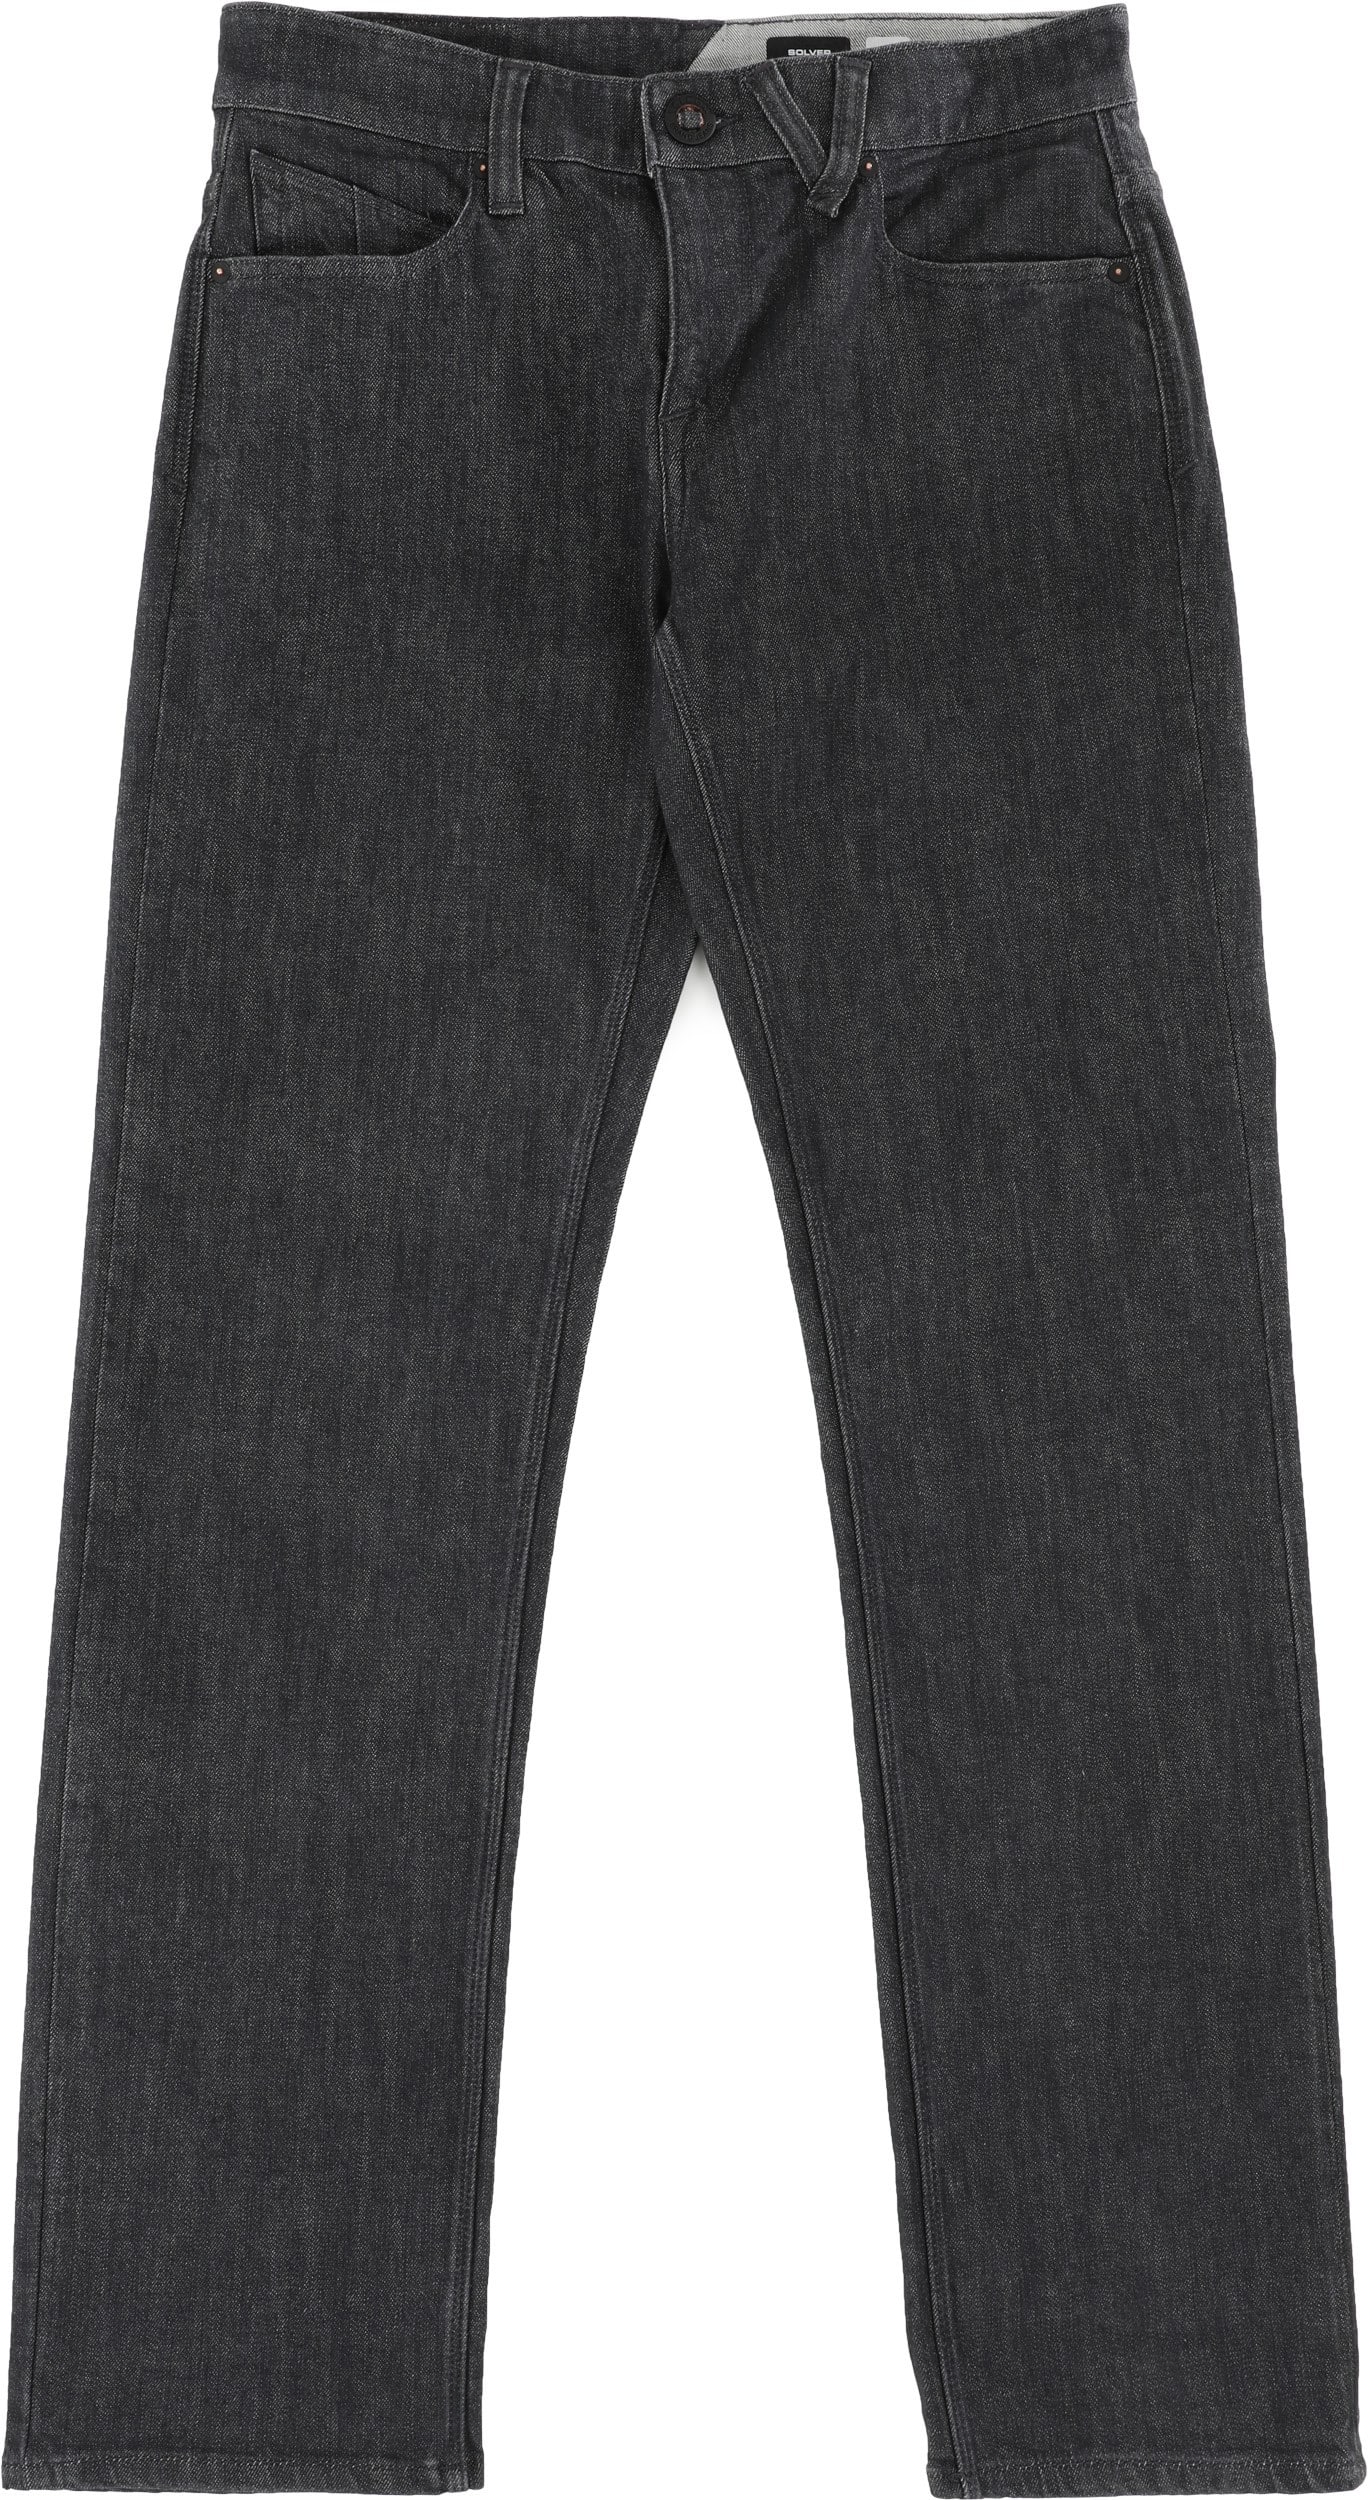 Volcom Solver Jeans - dark grey | Tactics